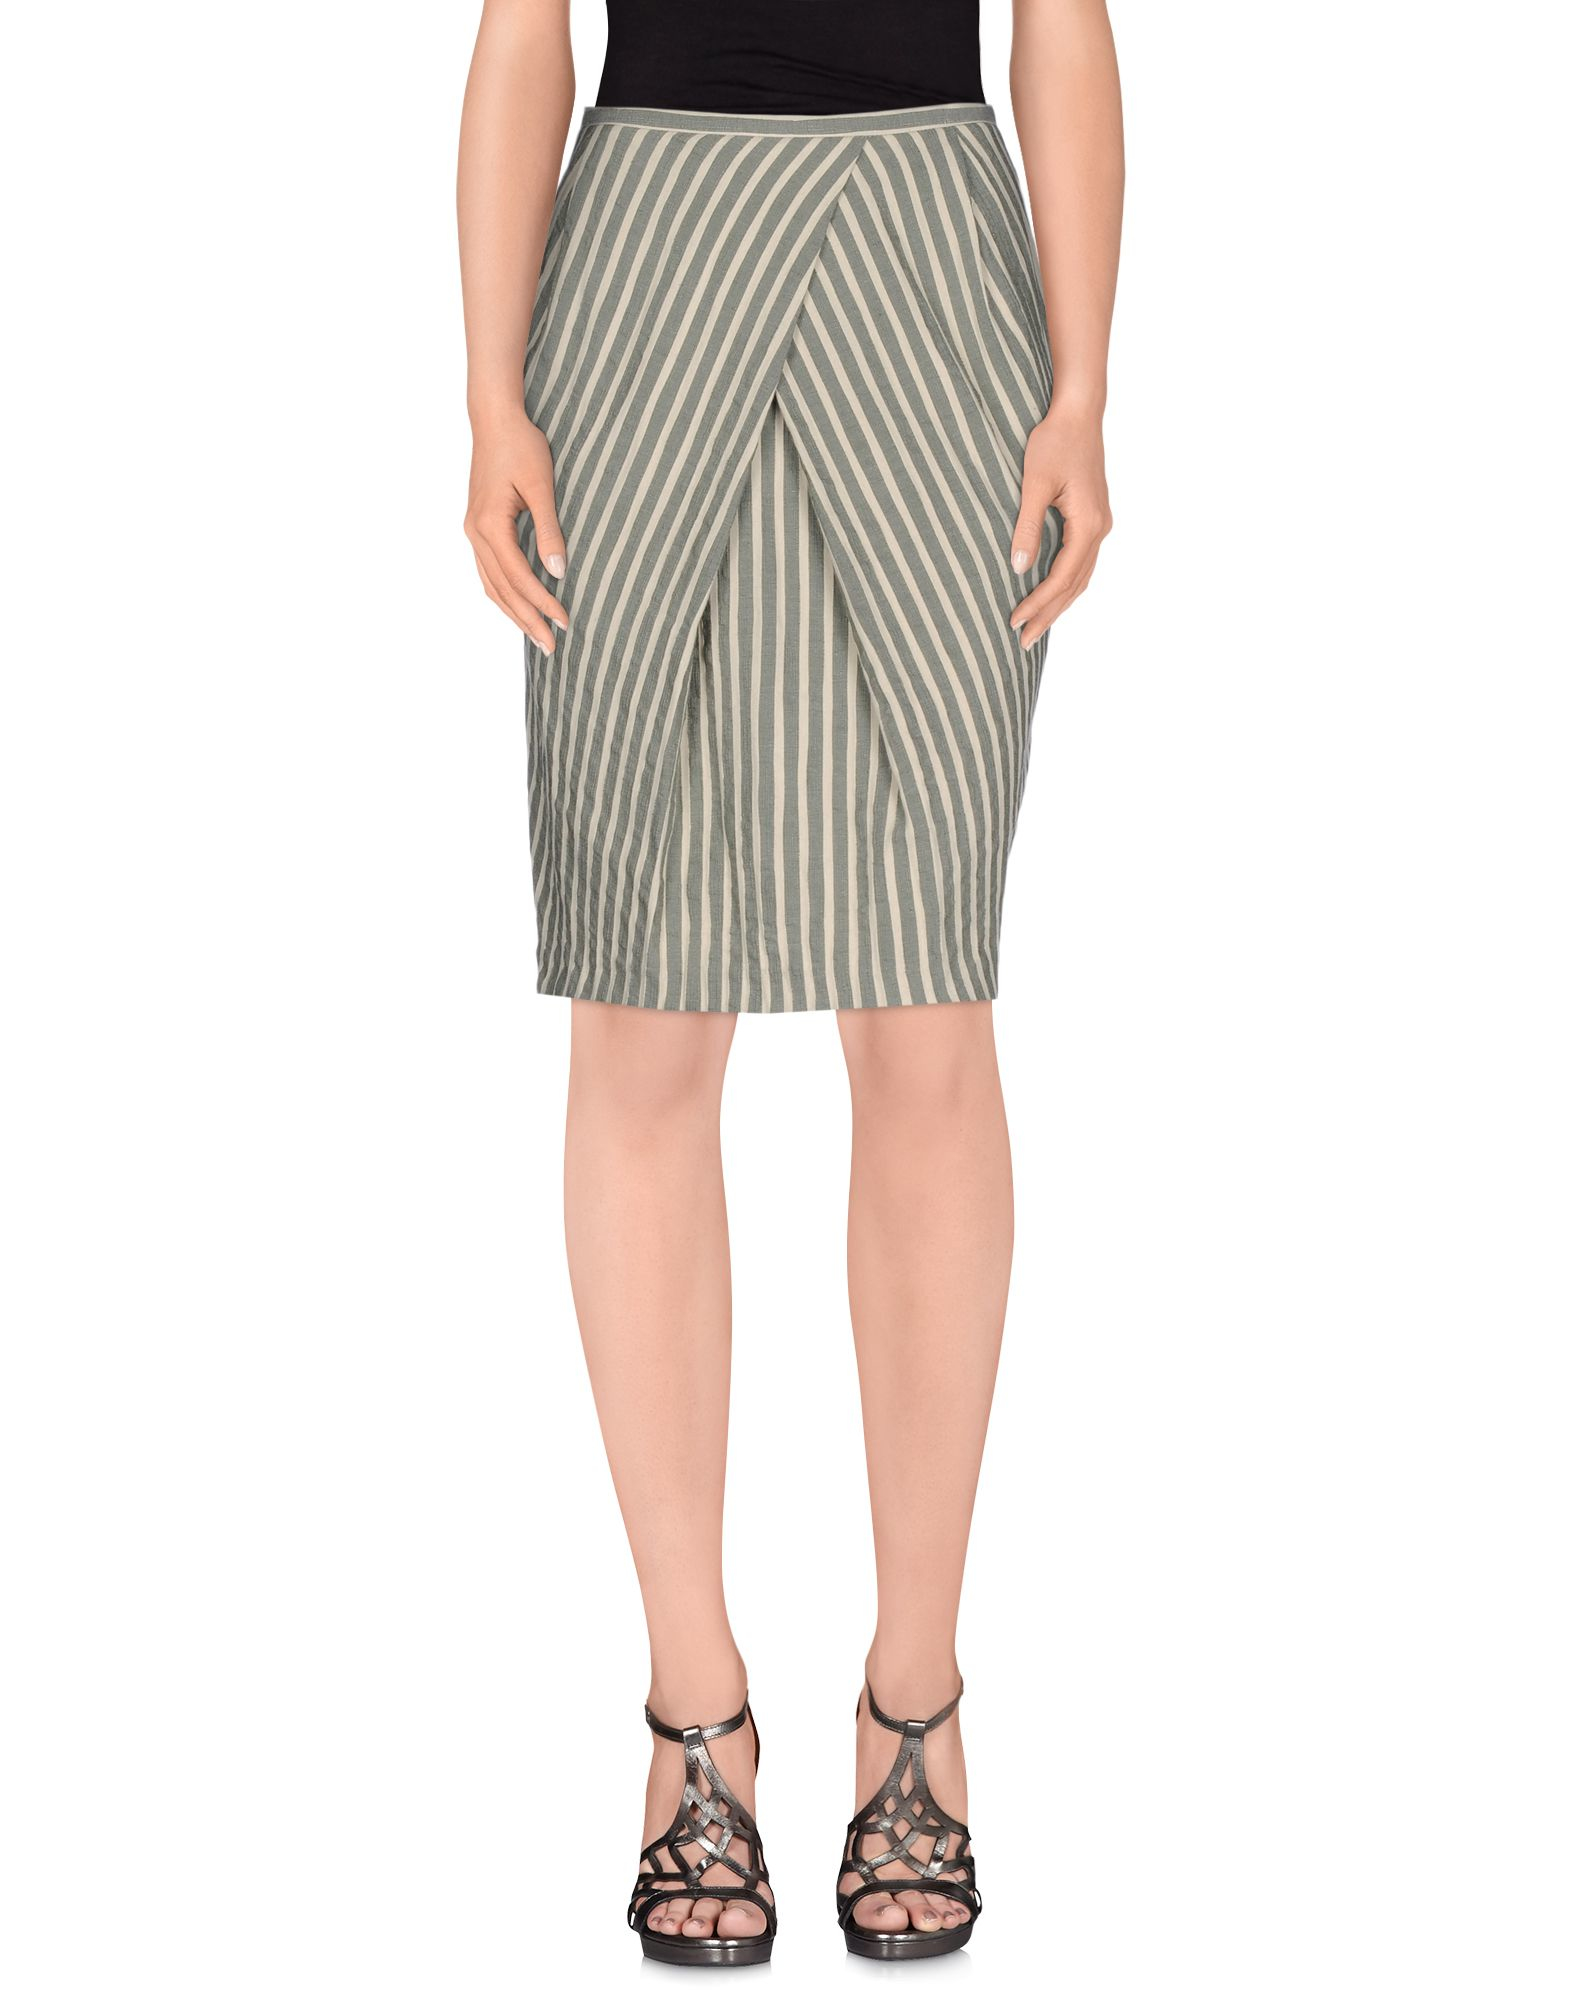 Momoní Knee Length Skirt in Gray (Grey) - Save 72% | Lyst